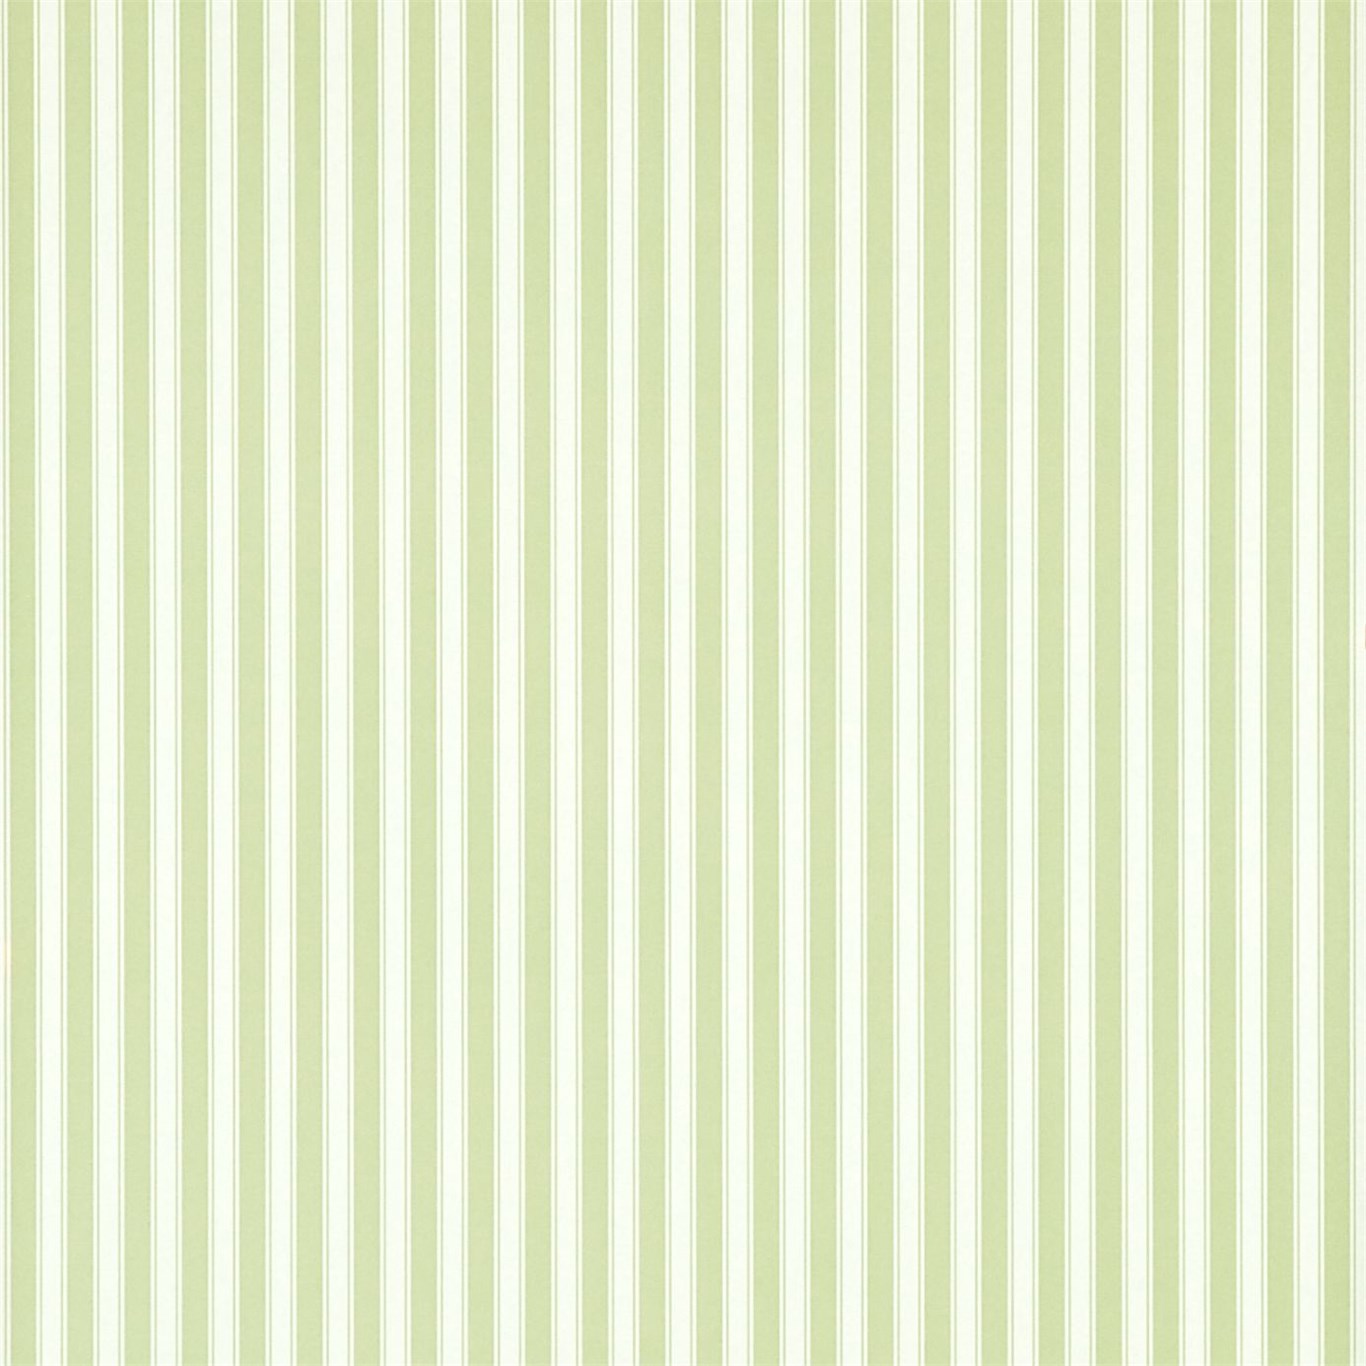 Wallpaper - Sanderson Caverley Wallpapers New Tiger Stripe Leaf Green/Ivory